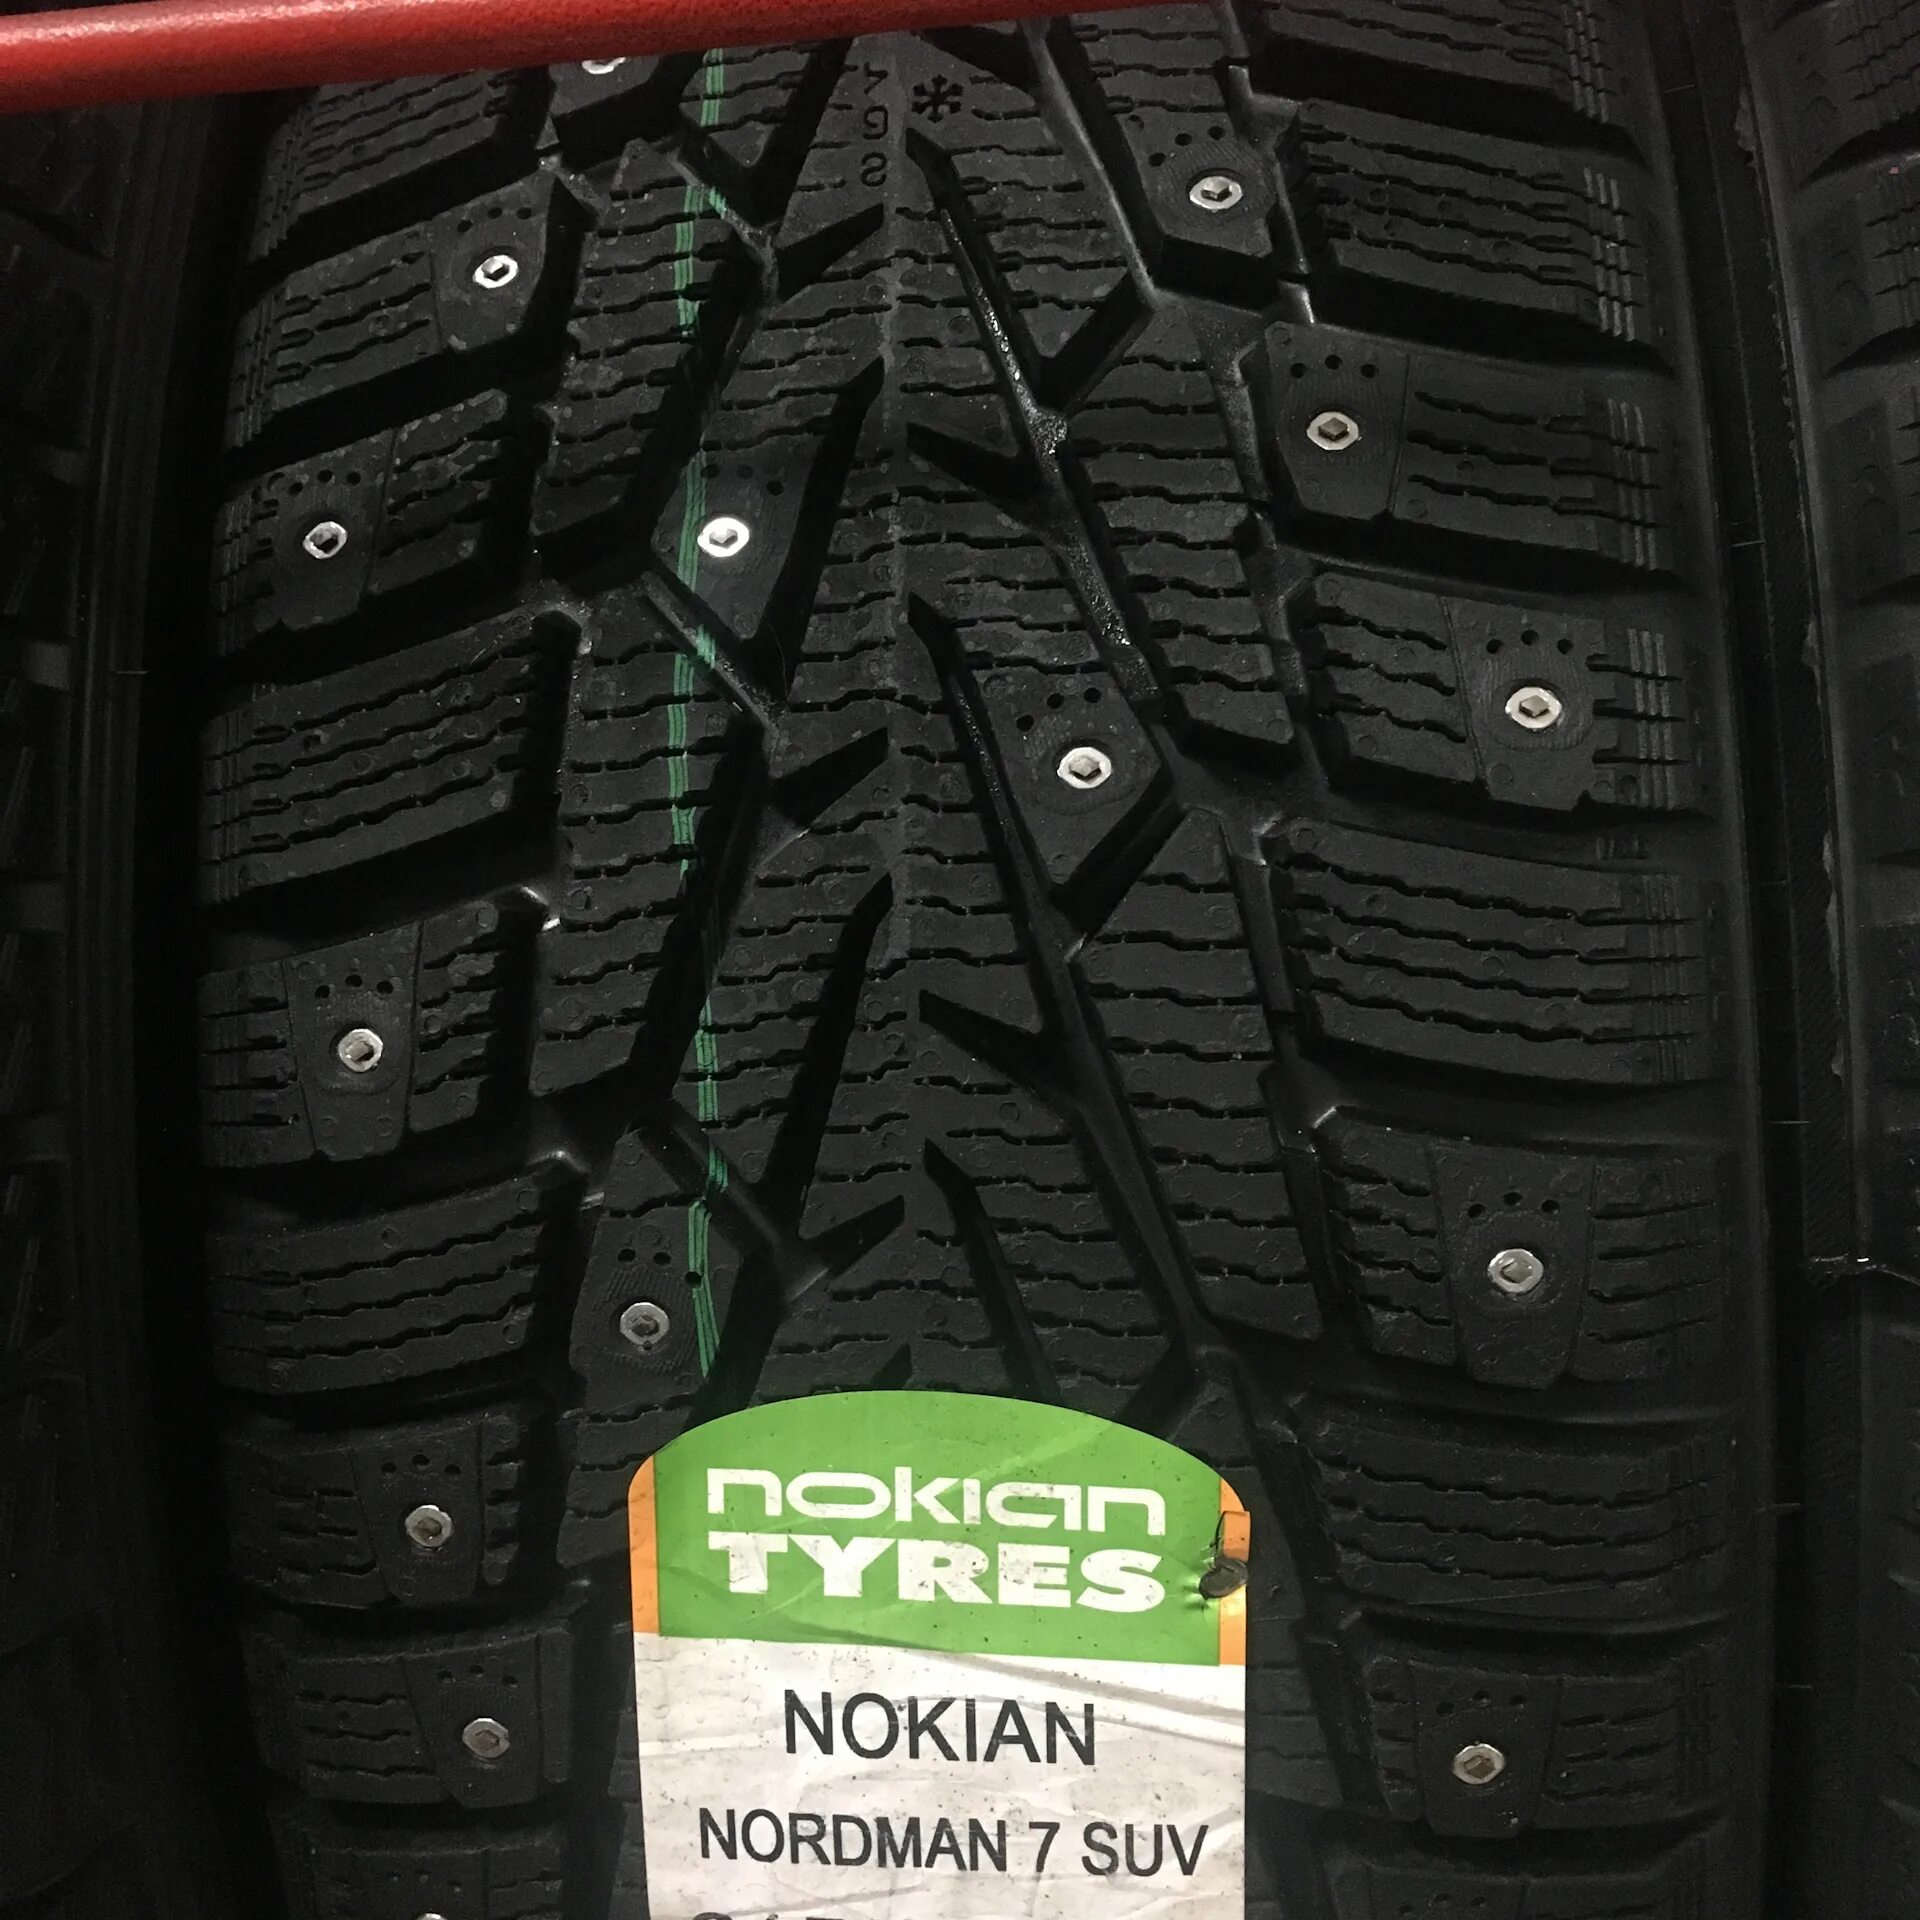 Нордман 7 SUV. Nokian Nordman 7 SUV. Nokian Tyres Nordman 7 SUV. Нордман 7 SUV 215 65 16.